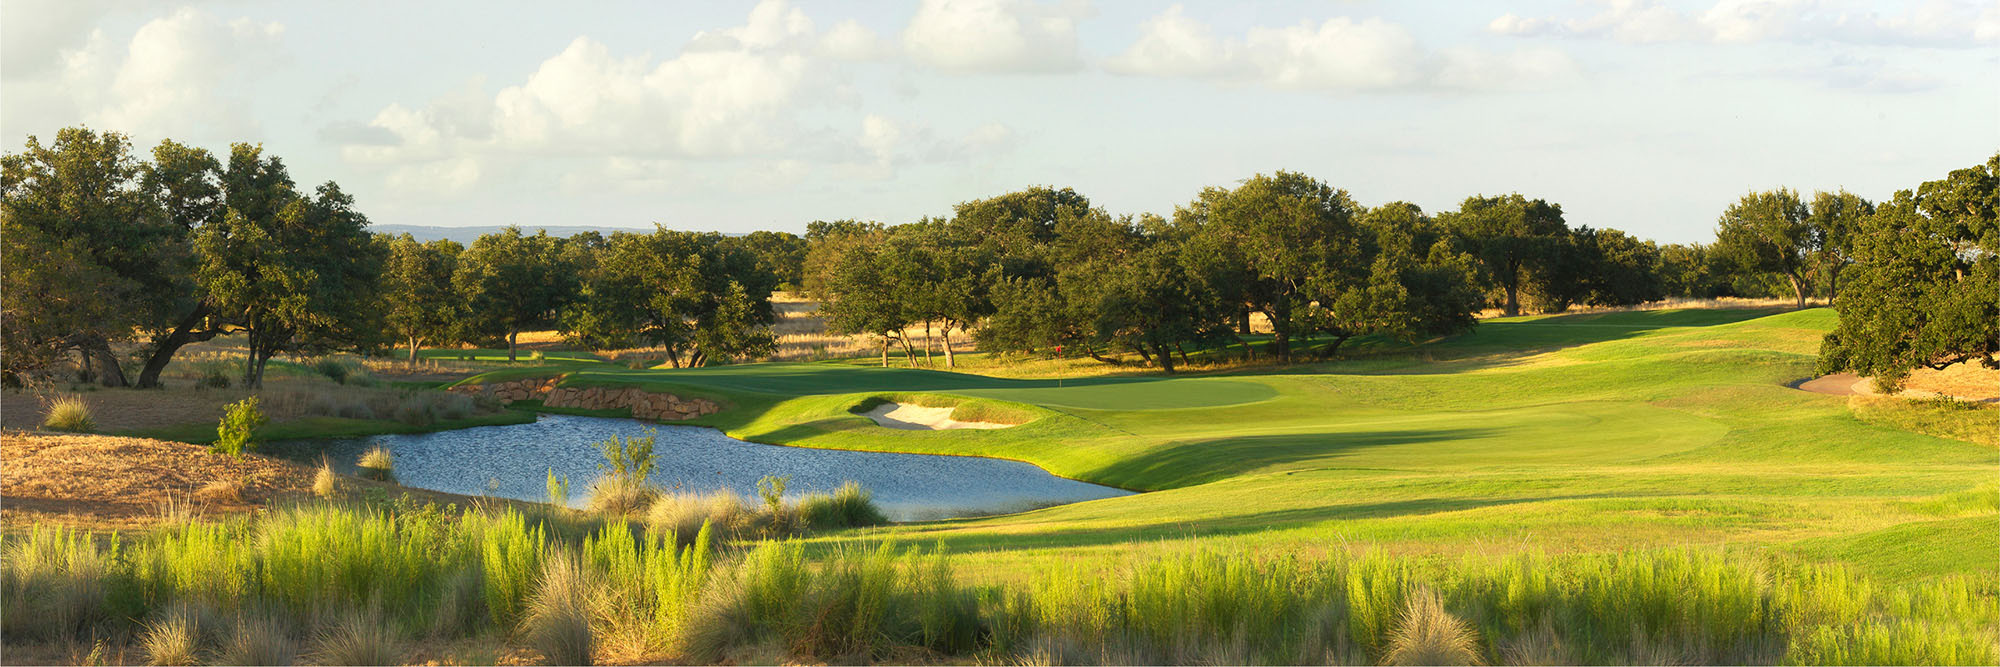 Golf Course Image - Escondido No. 15